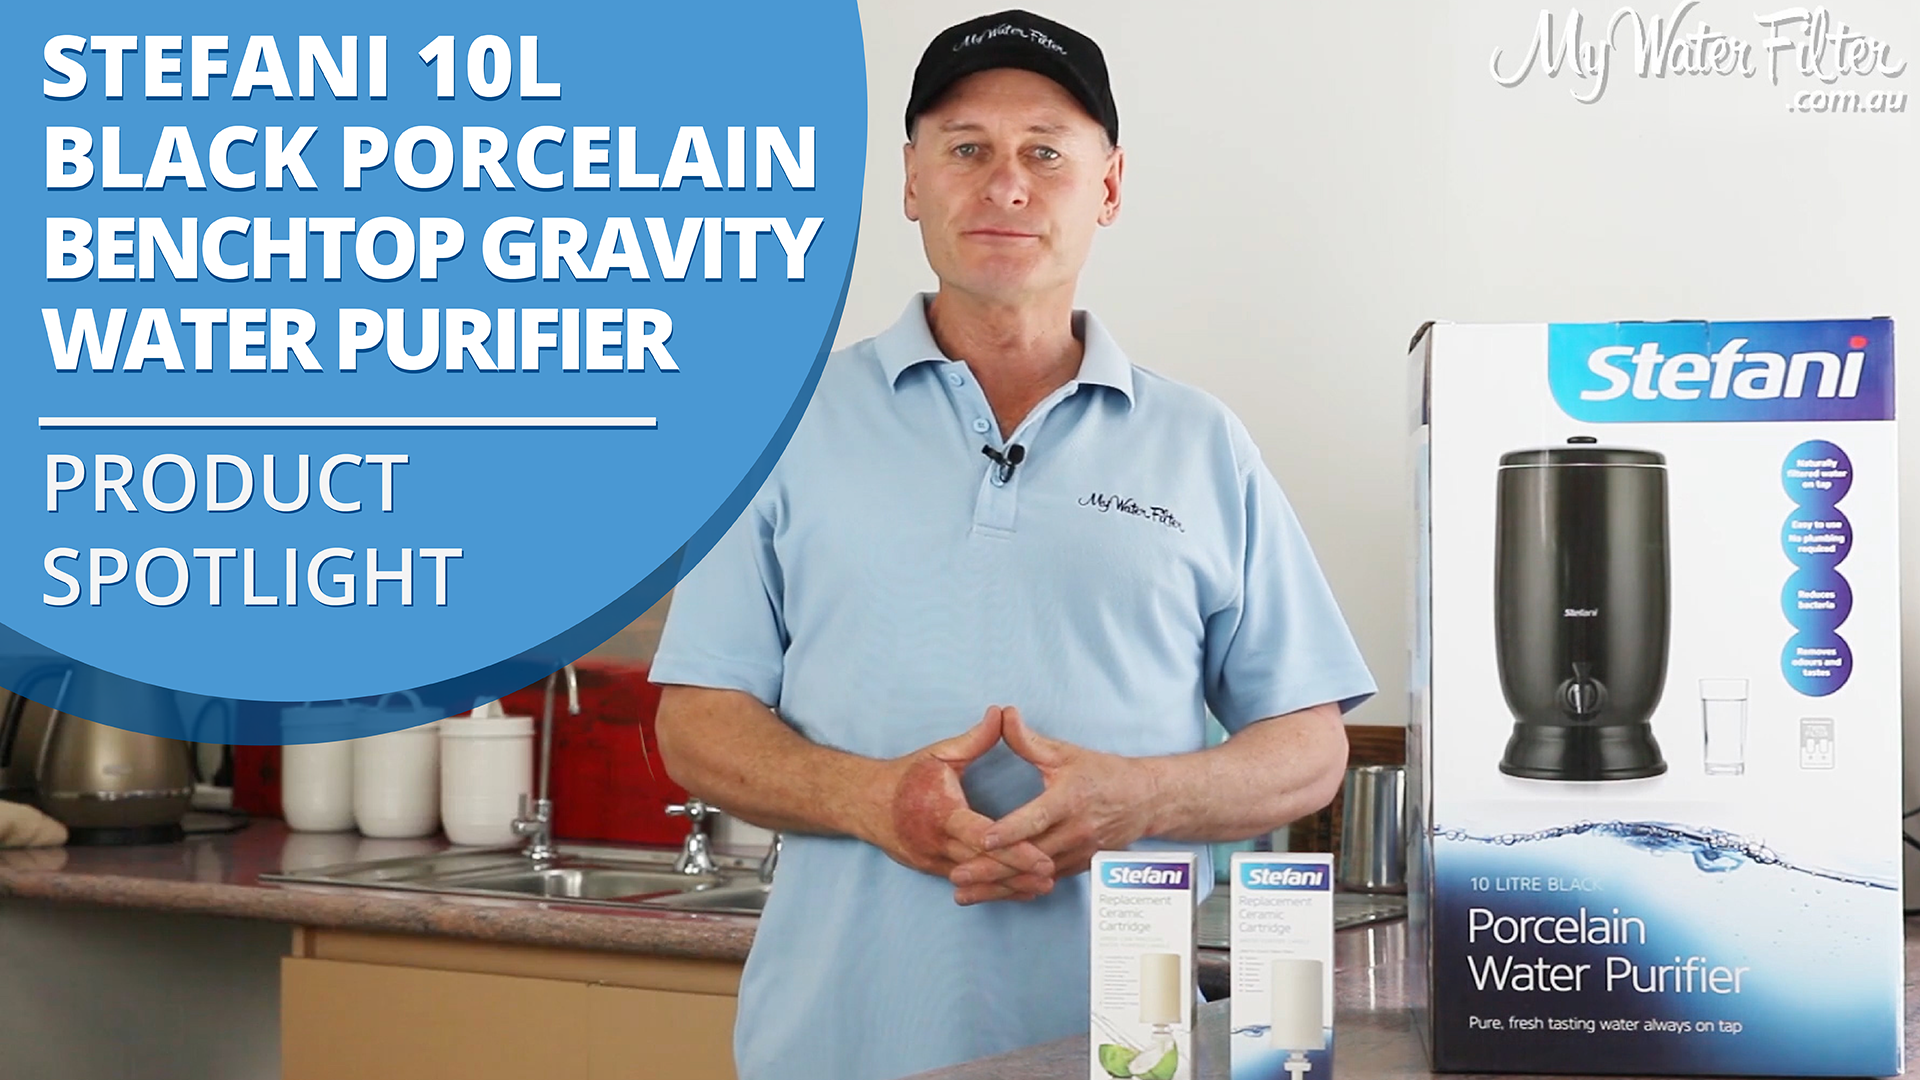 Stefani 10L Black Porcelain Benchtop Gravity Water Purifier - Product Spotlight [VIDEO] 